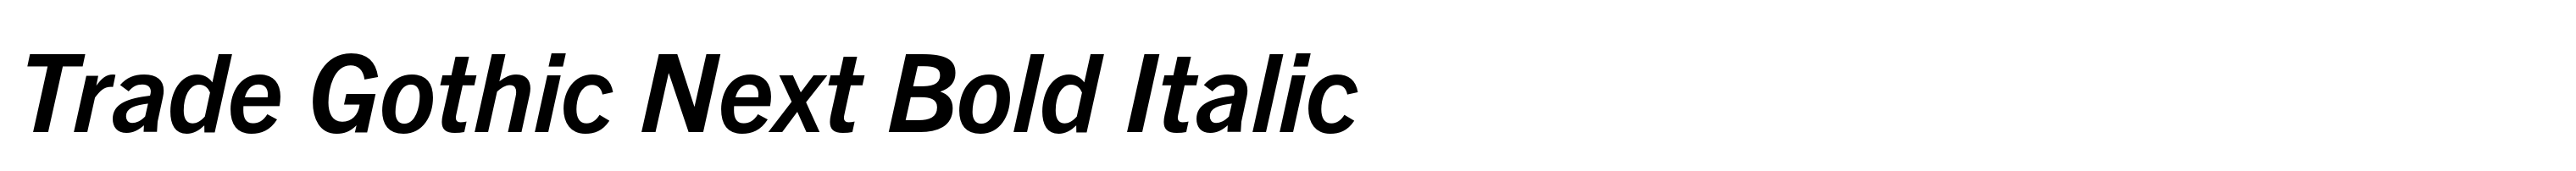 Trade Gothic Next Bold Italic